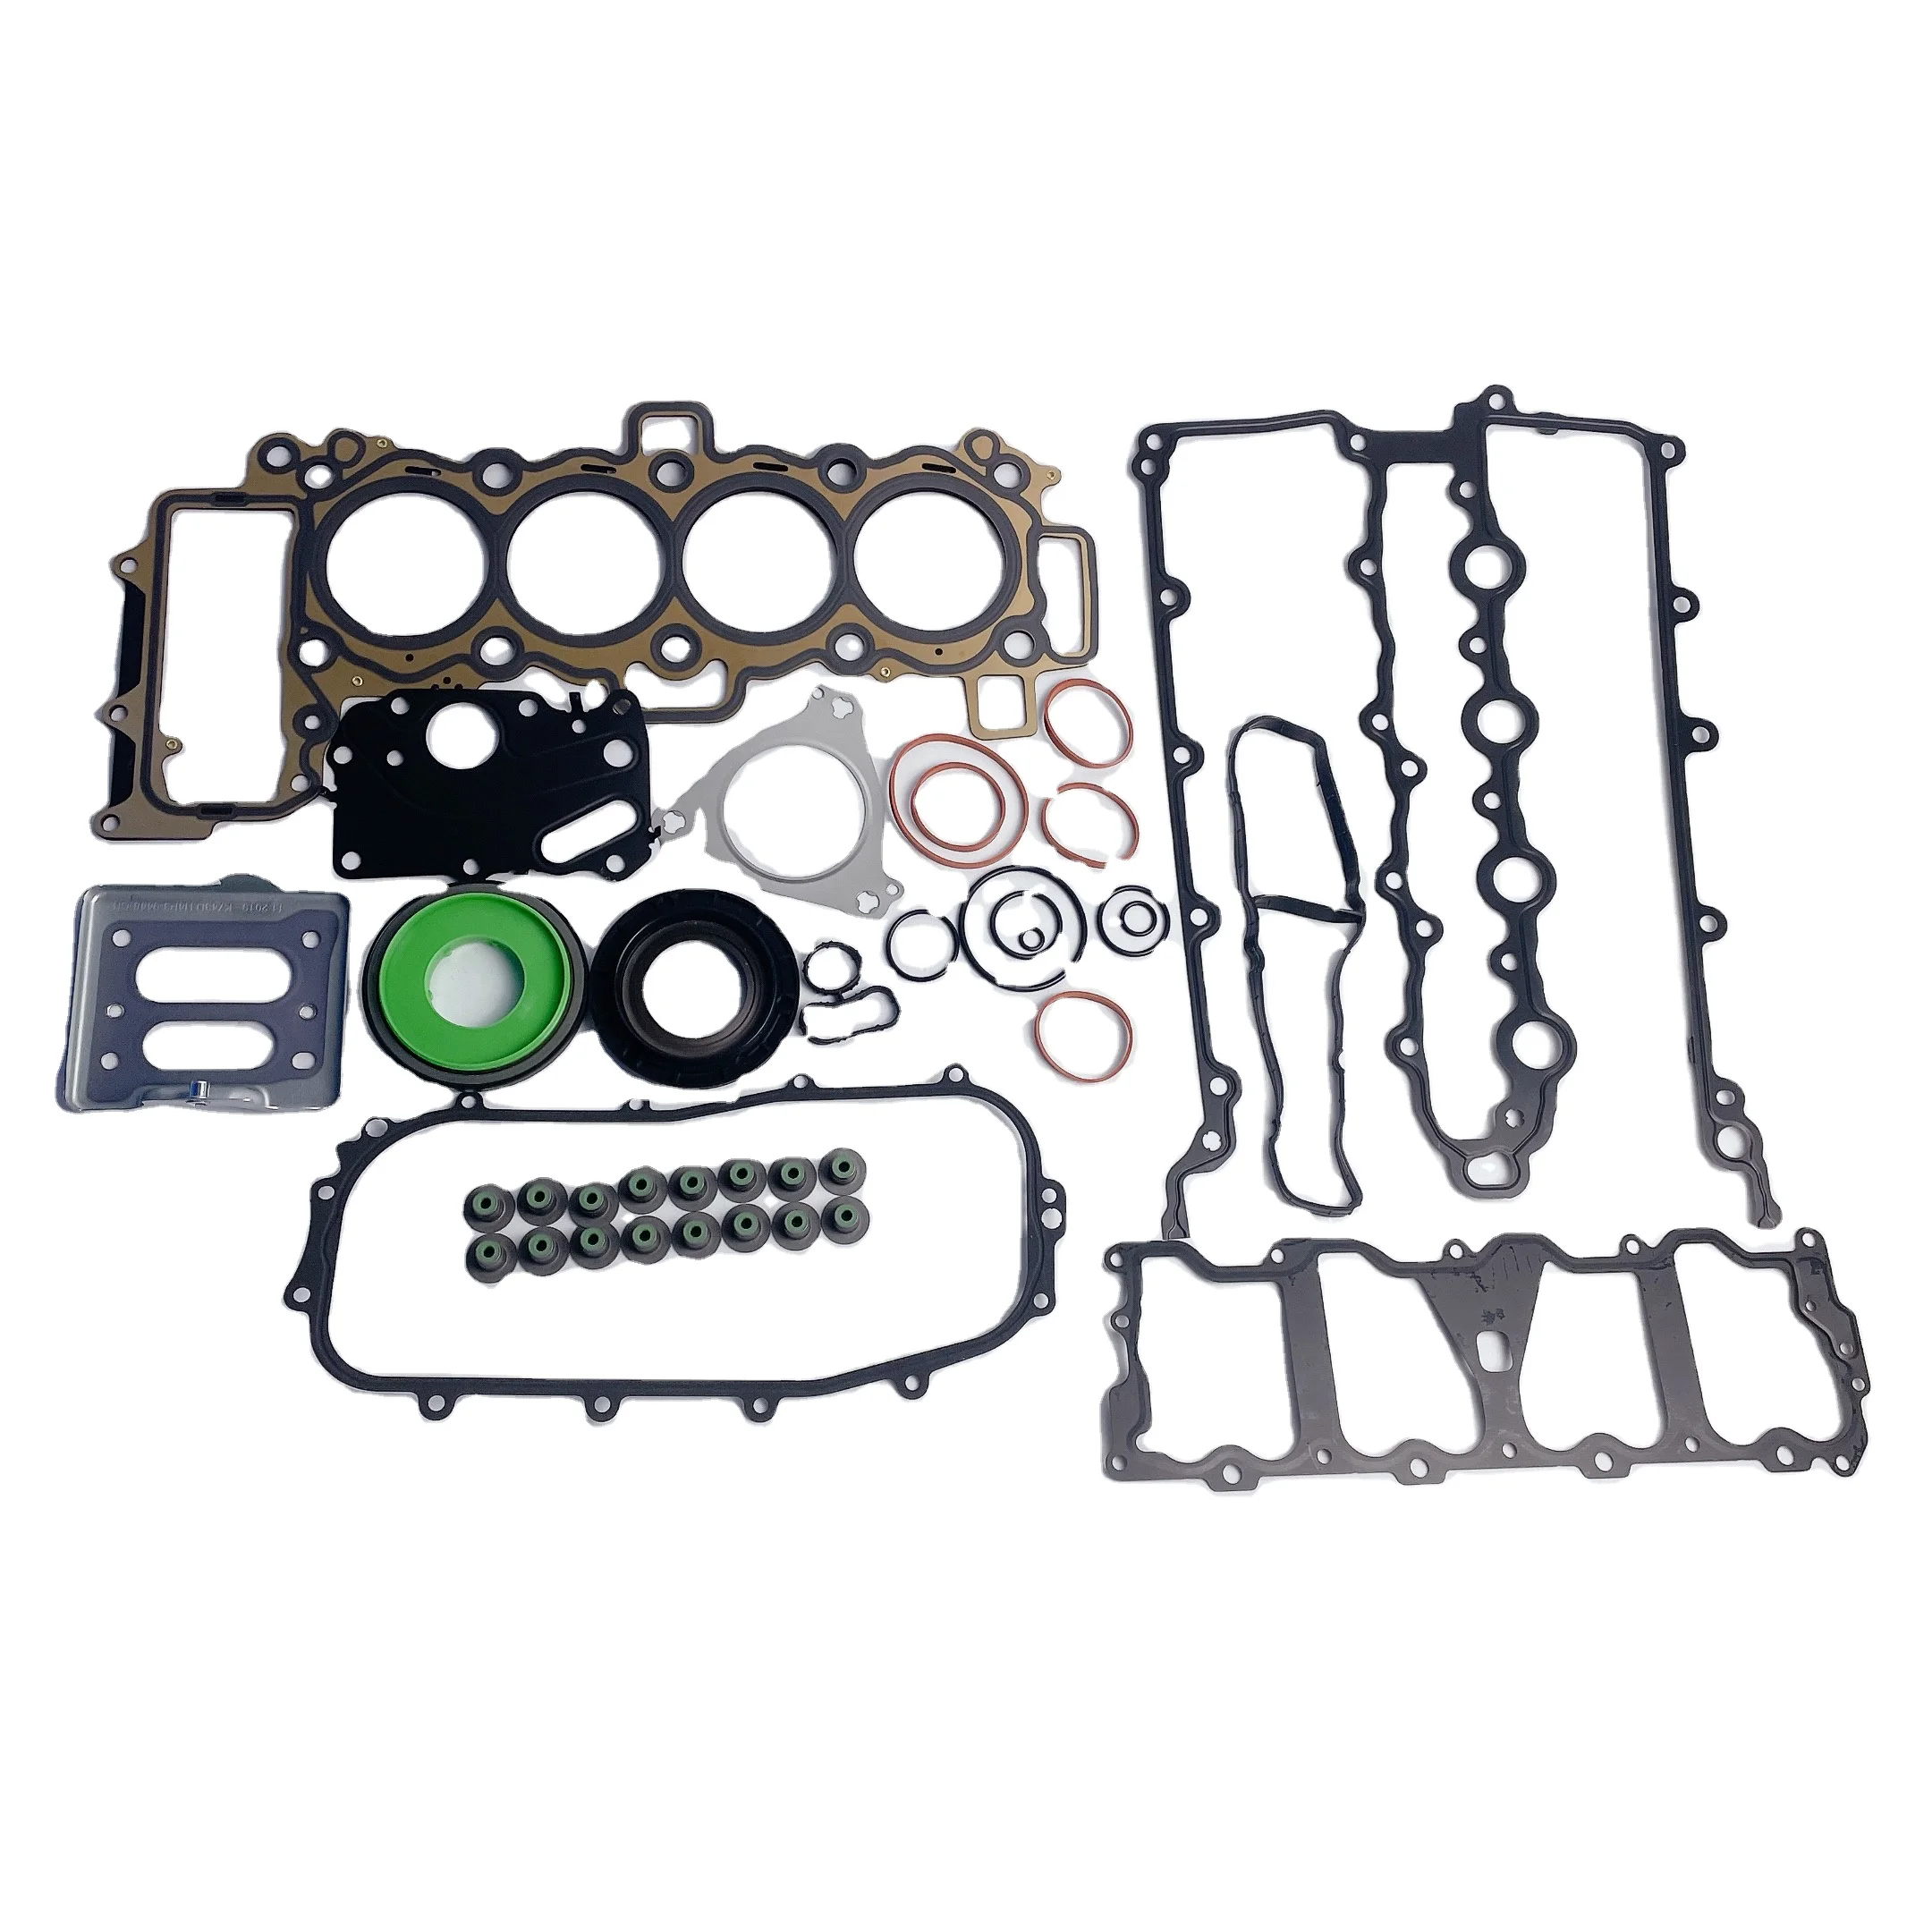 

KUSIMA Wholesale Engine Gasket Kits Fit For Range Rover Discovery Sport Defender petrol AJ200 2.0T 2018+ LR091486